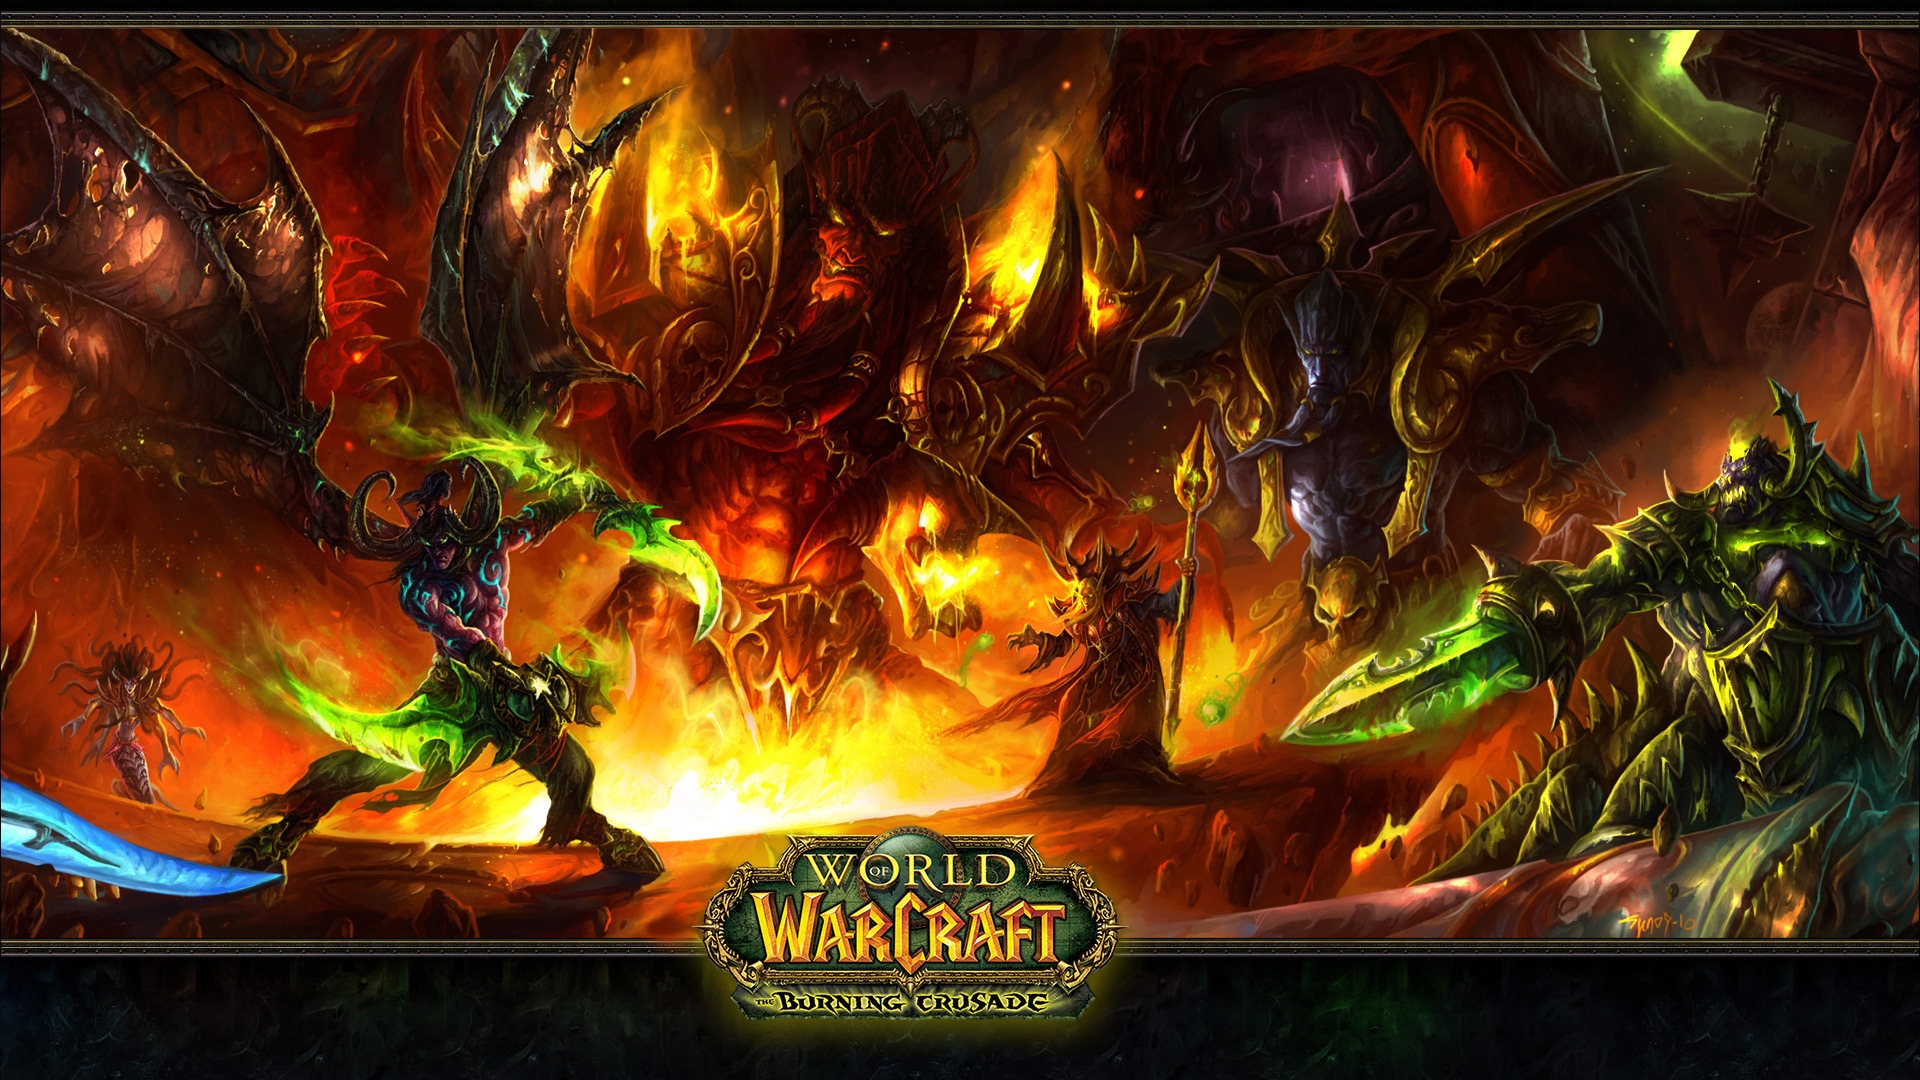 World of Warcraft Burning Crusade for 1920 x 1080 HDTV 1080p resolution